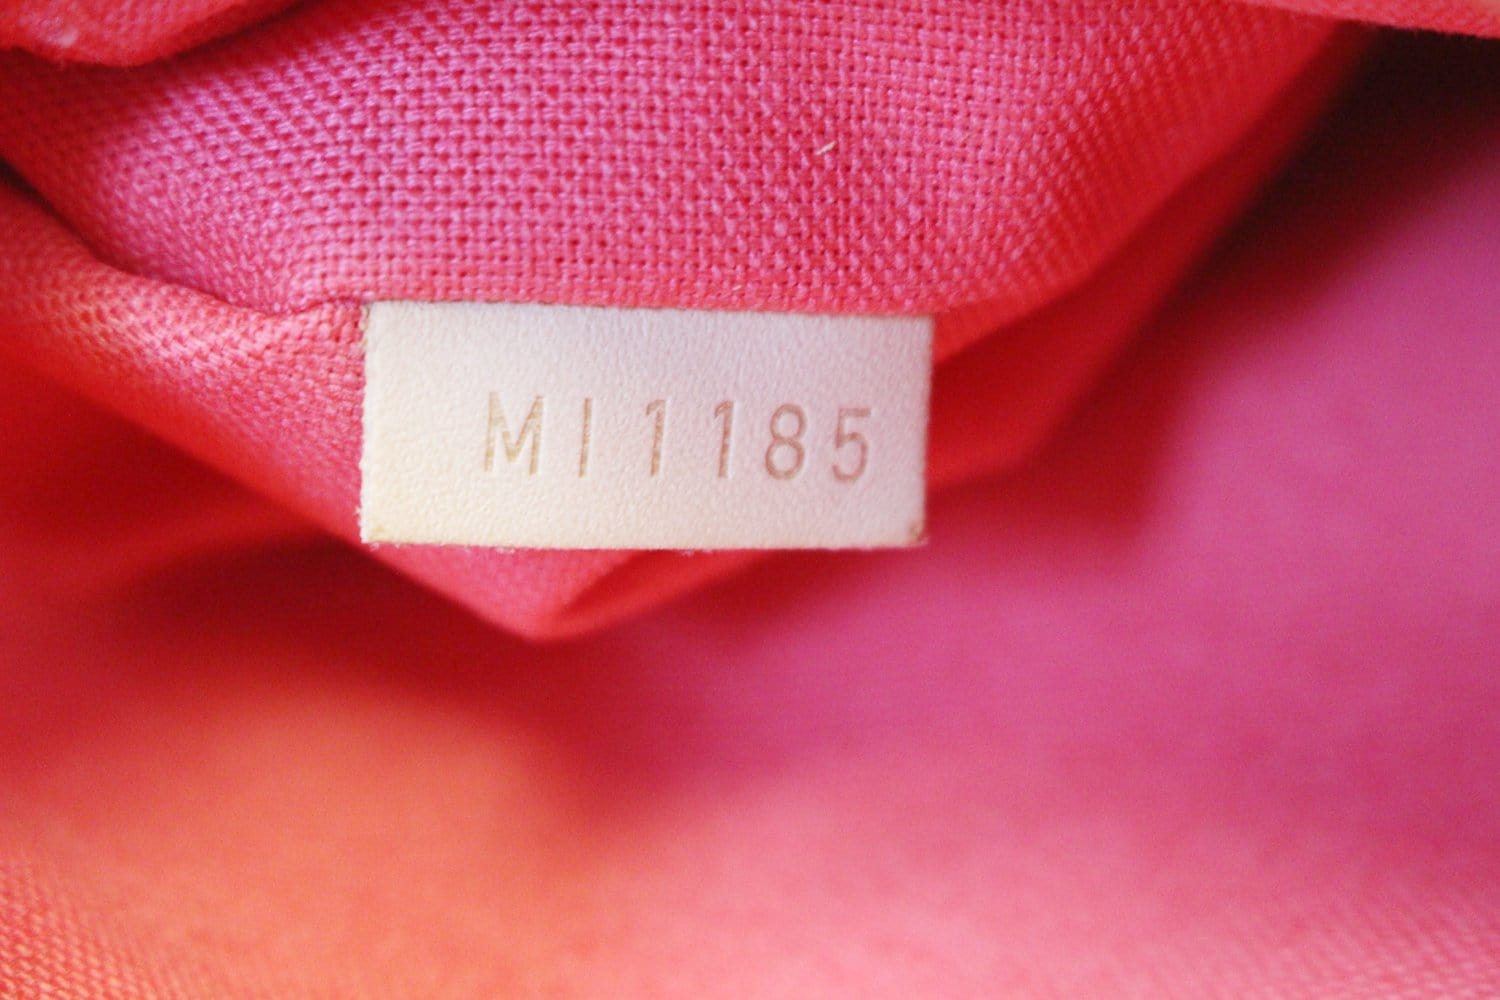 Louis Vuitton Delightful Damier azur, Hot Pink Interior, Discontinued Tan -  $1100 (65% Off Retail) - From Emmaline